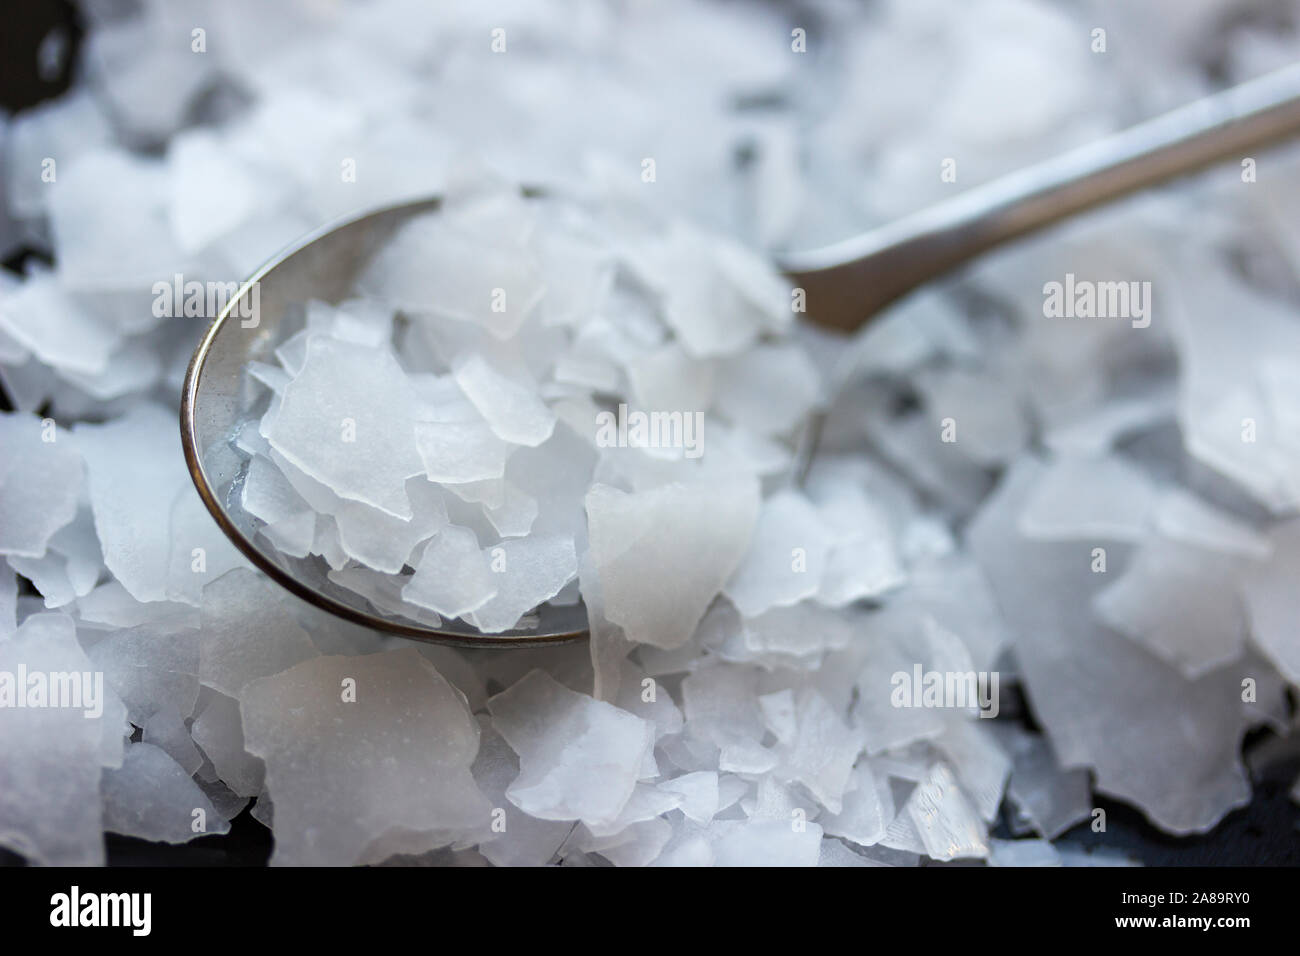 Magnesium chloride flakes -sea salt - close up Stock Photo